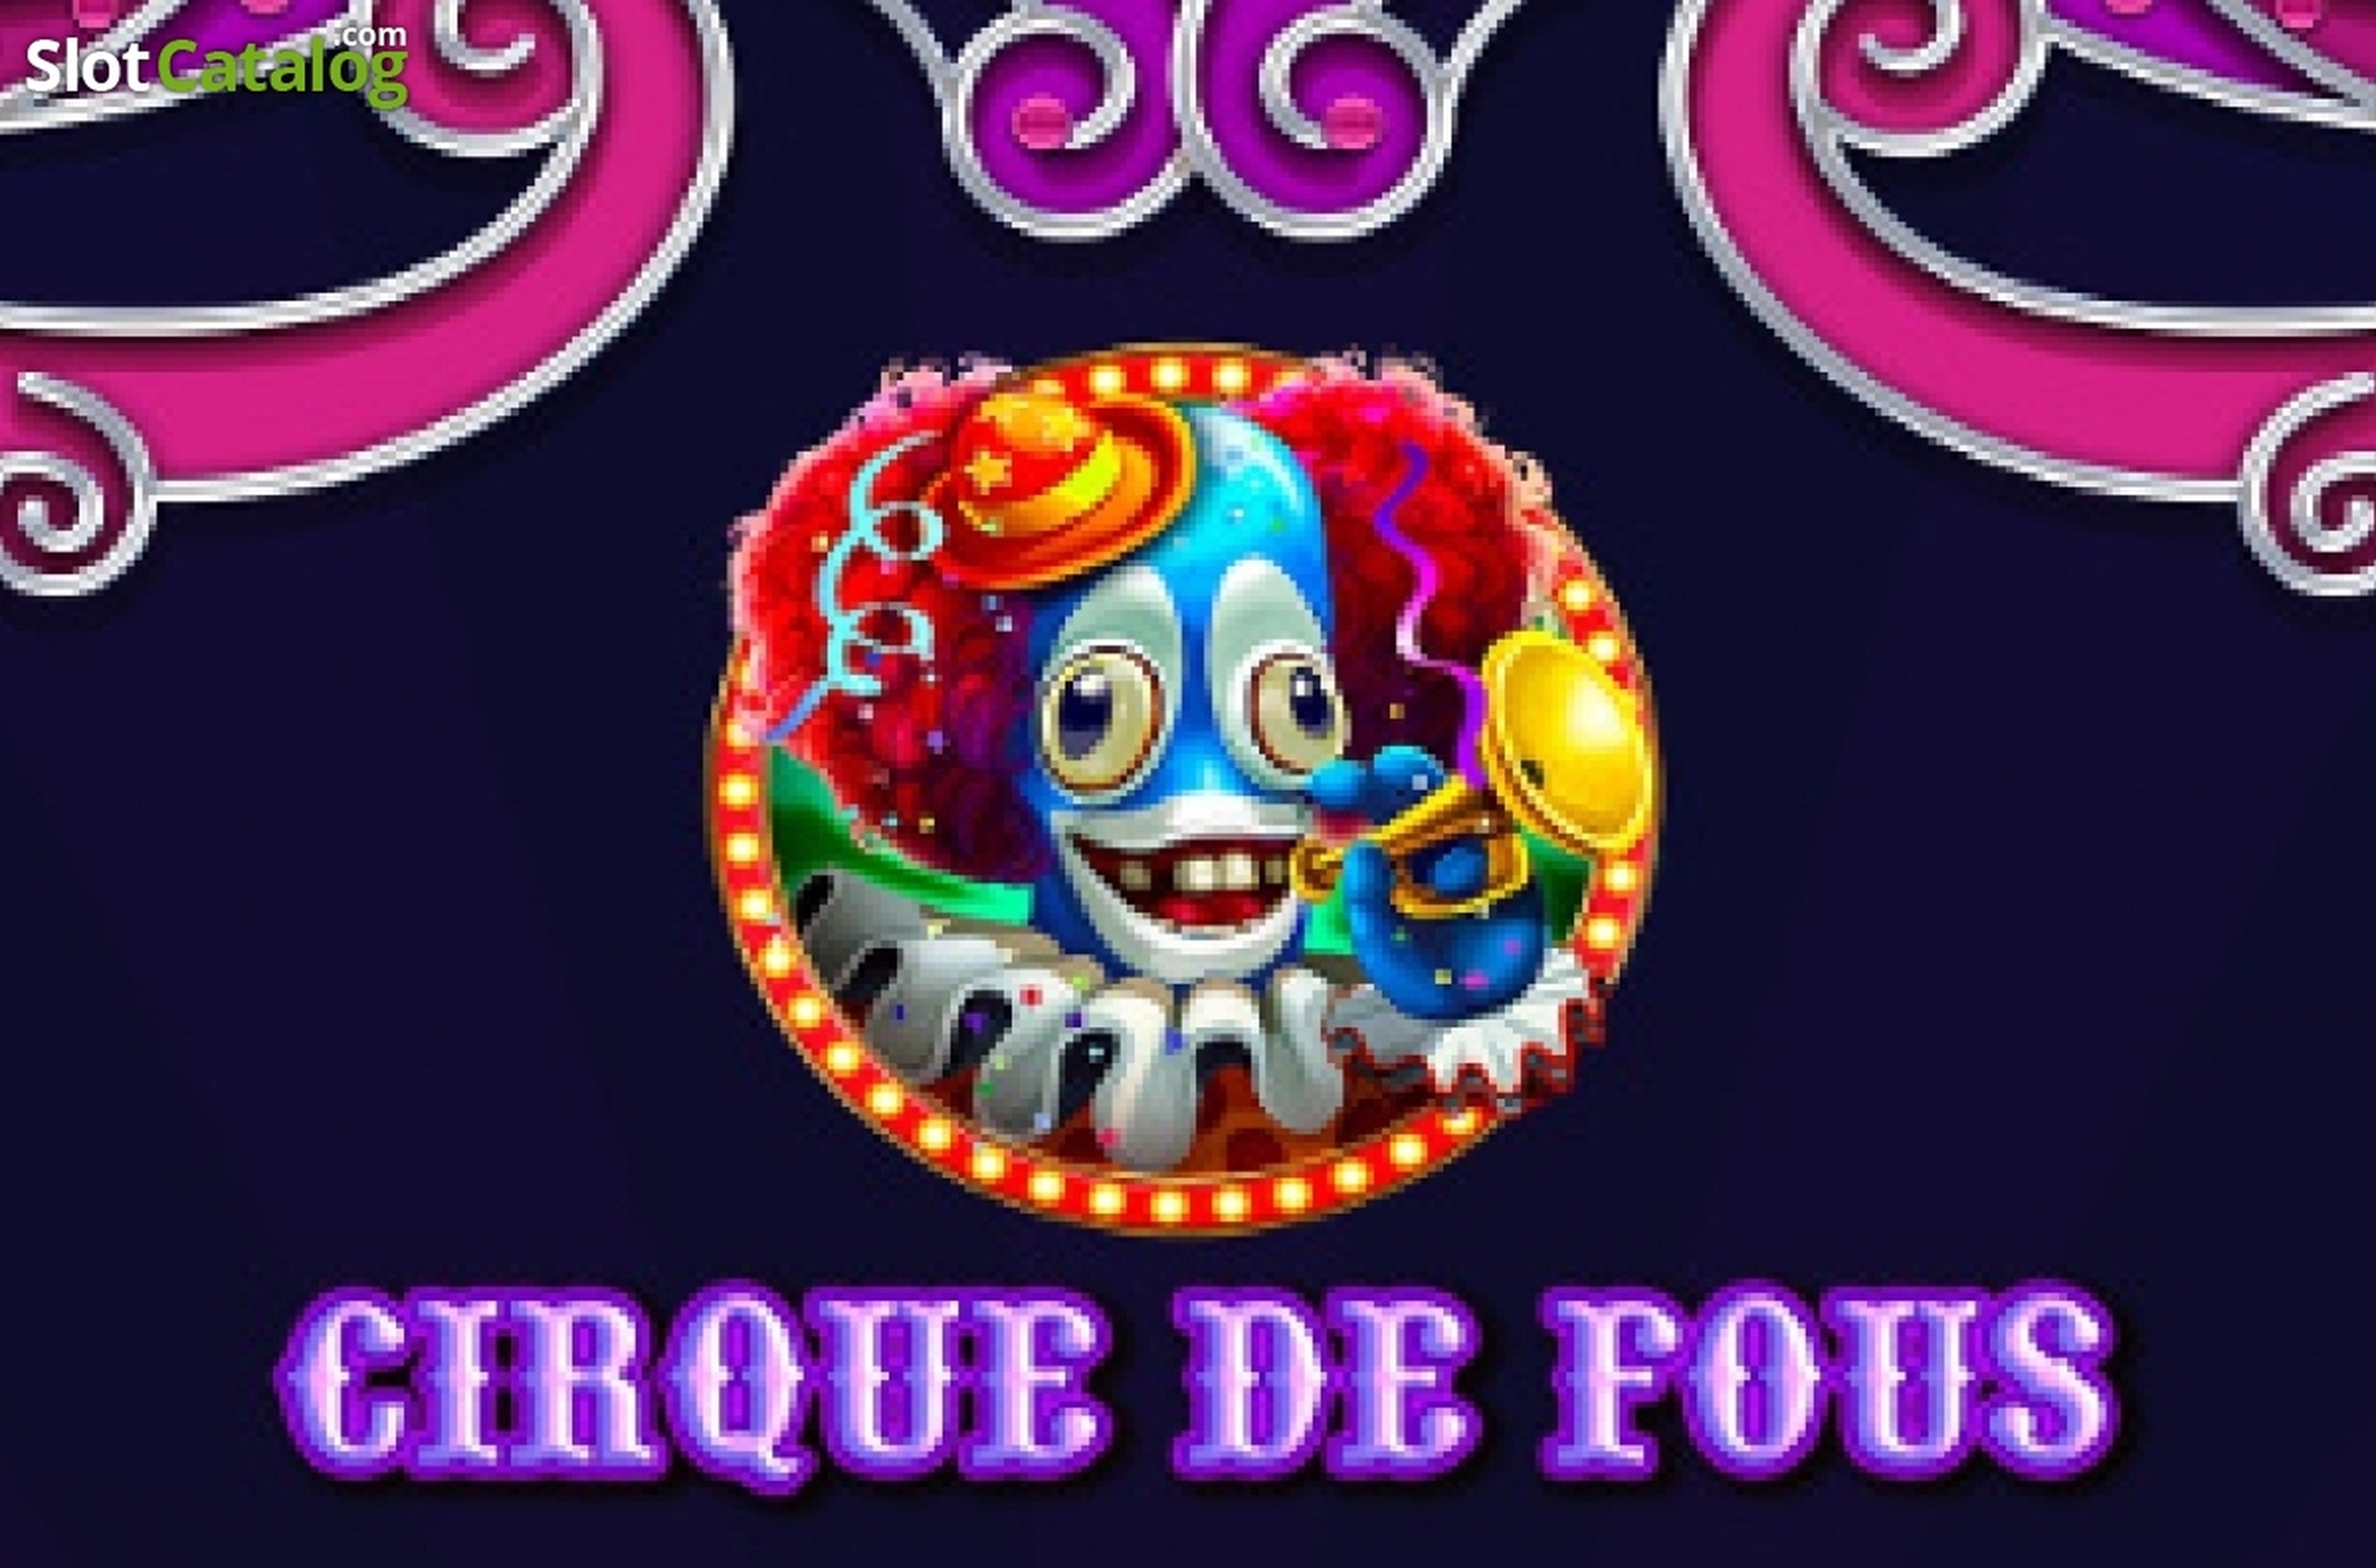 Cirque De Fous demo